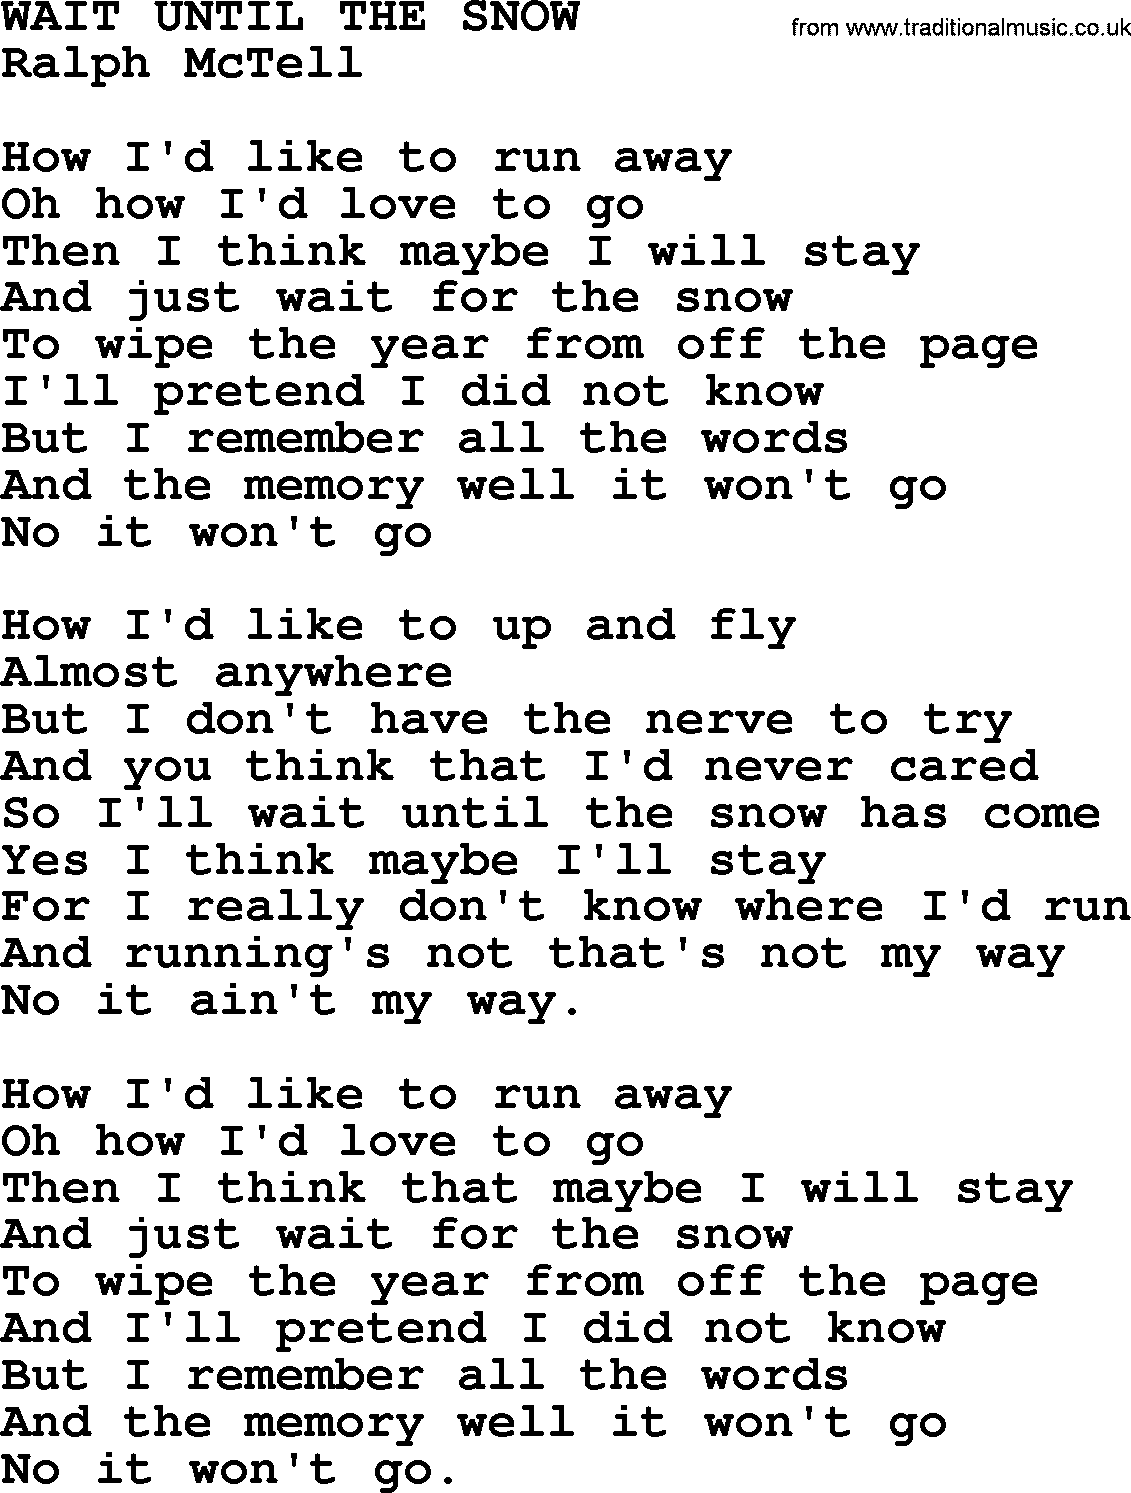 Ralph McTell Song: Wait Until The Snow, lyrics